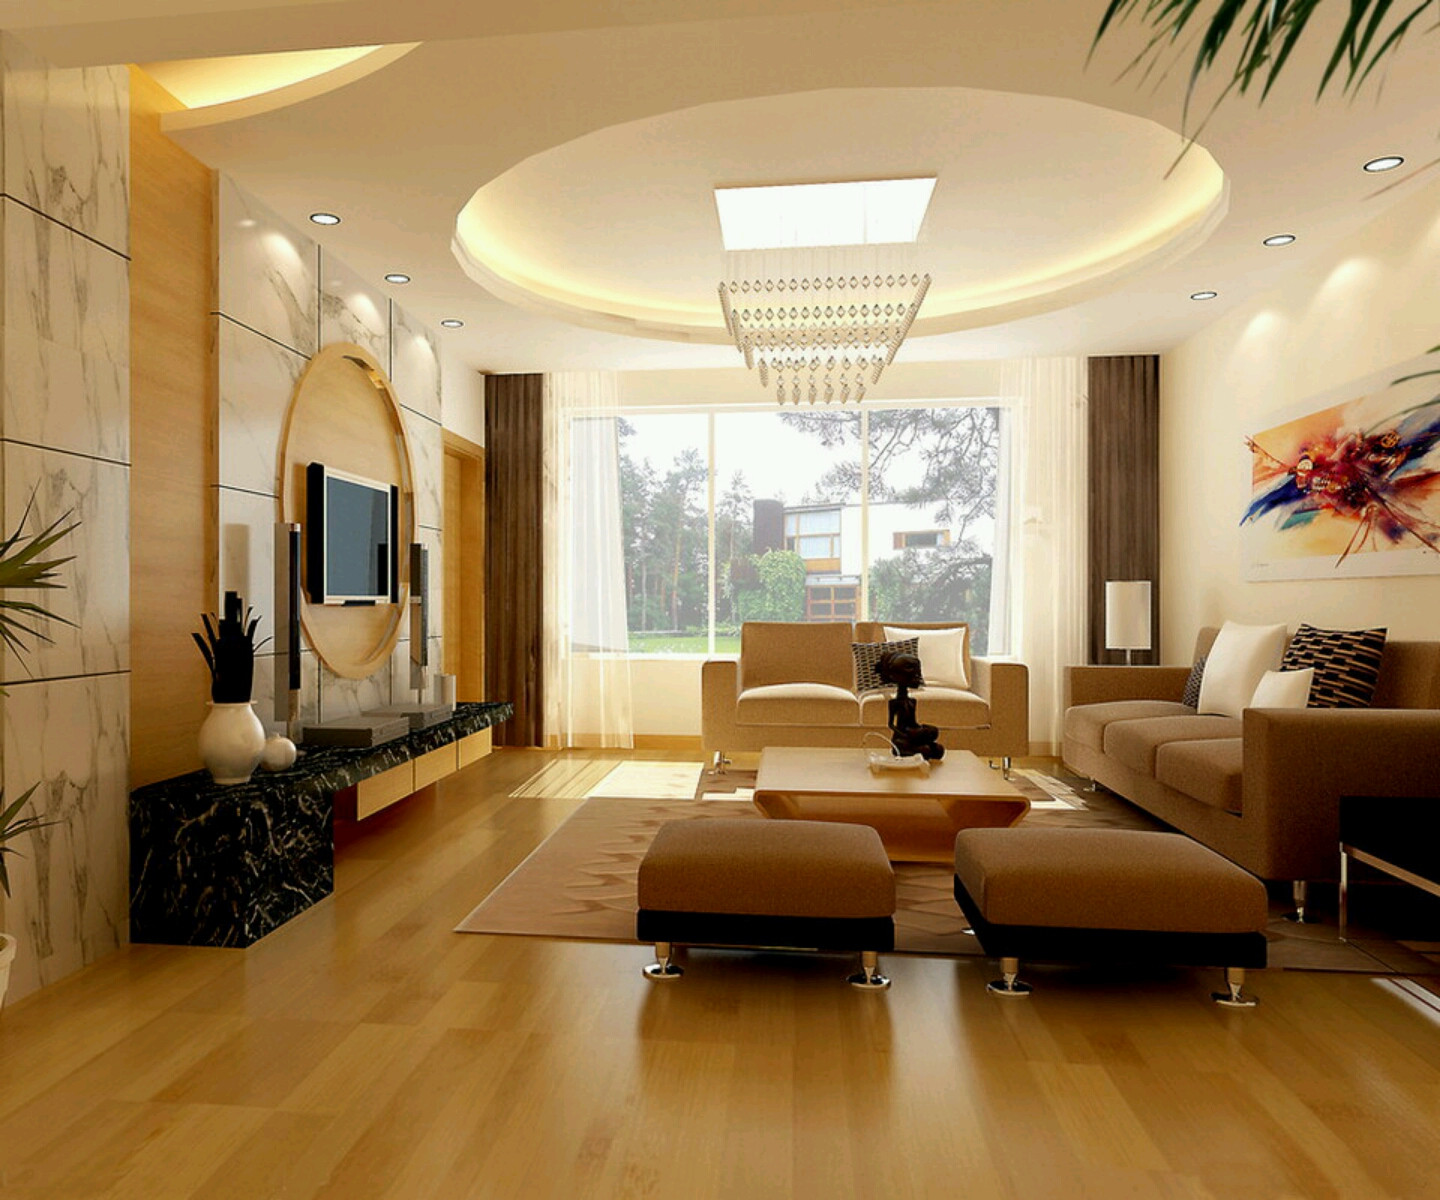 Living Room Ceiling Ideas
 Modern interior decoration living rooms ceiling designs